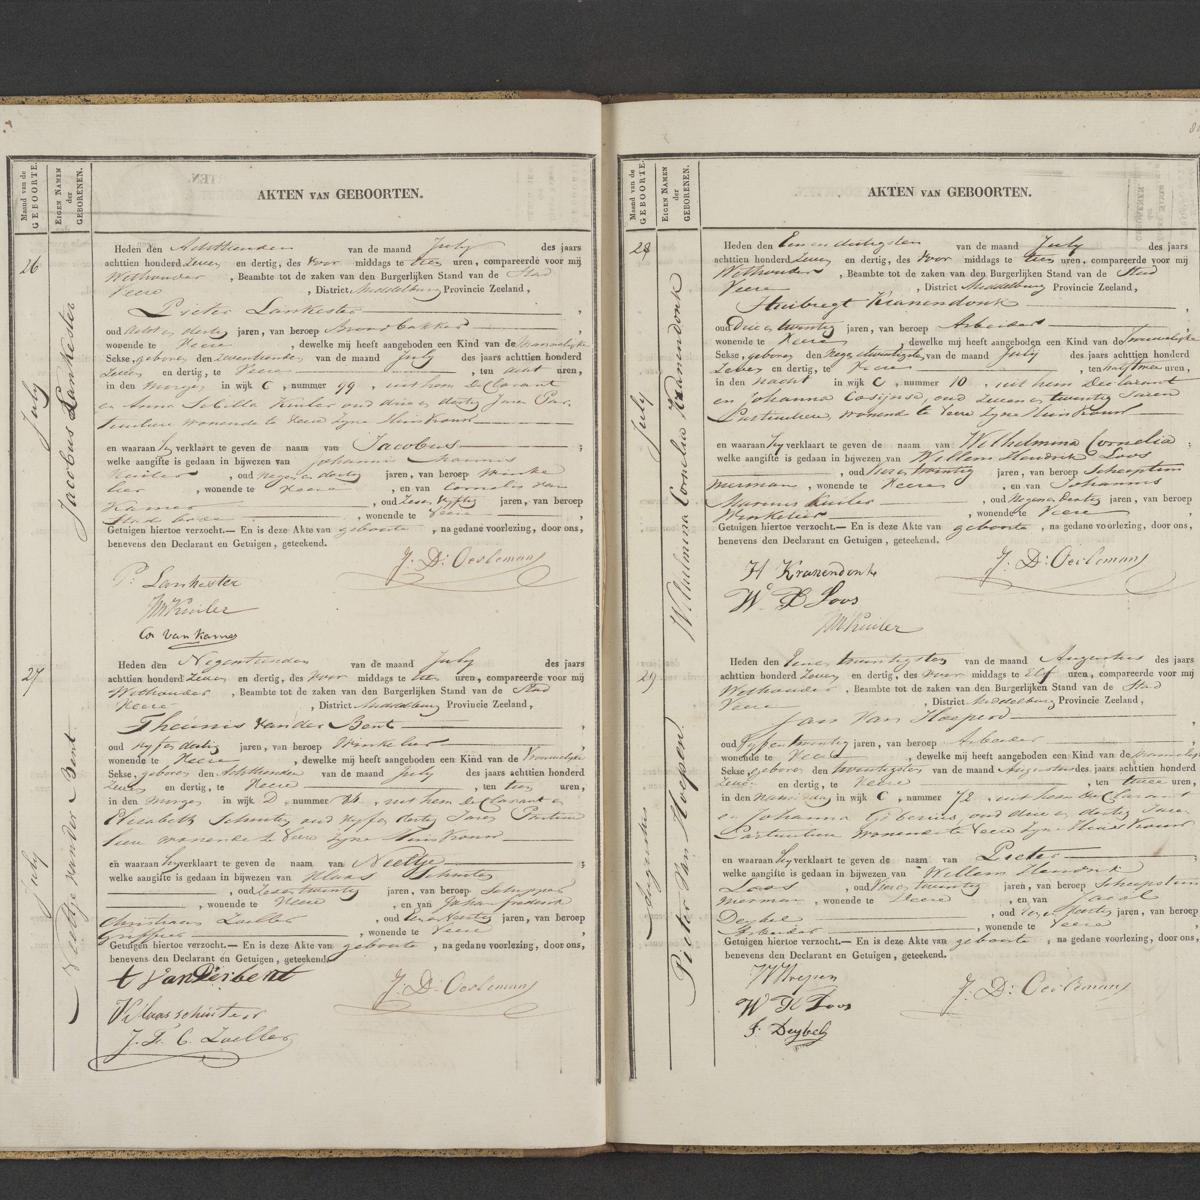 Civil registry of births, Veere, 1837, records 26-29